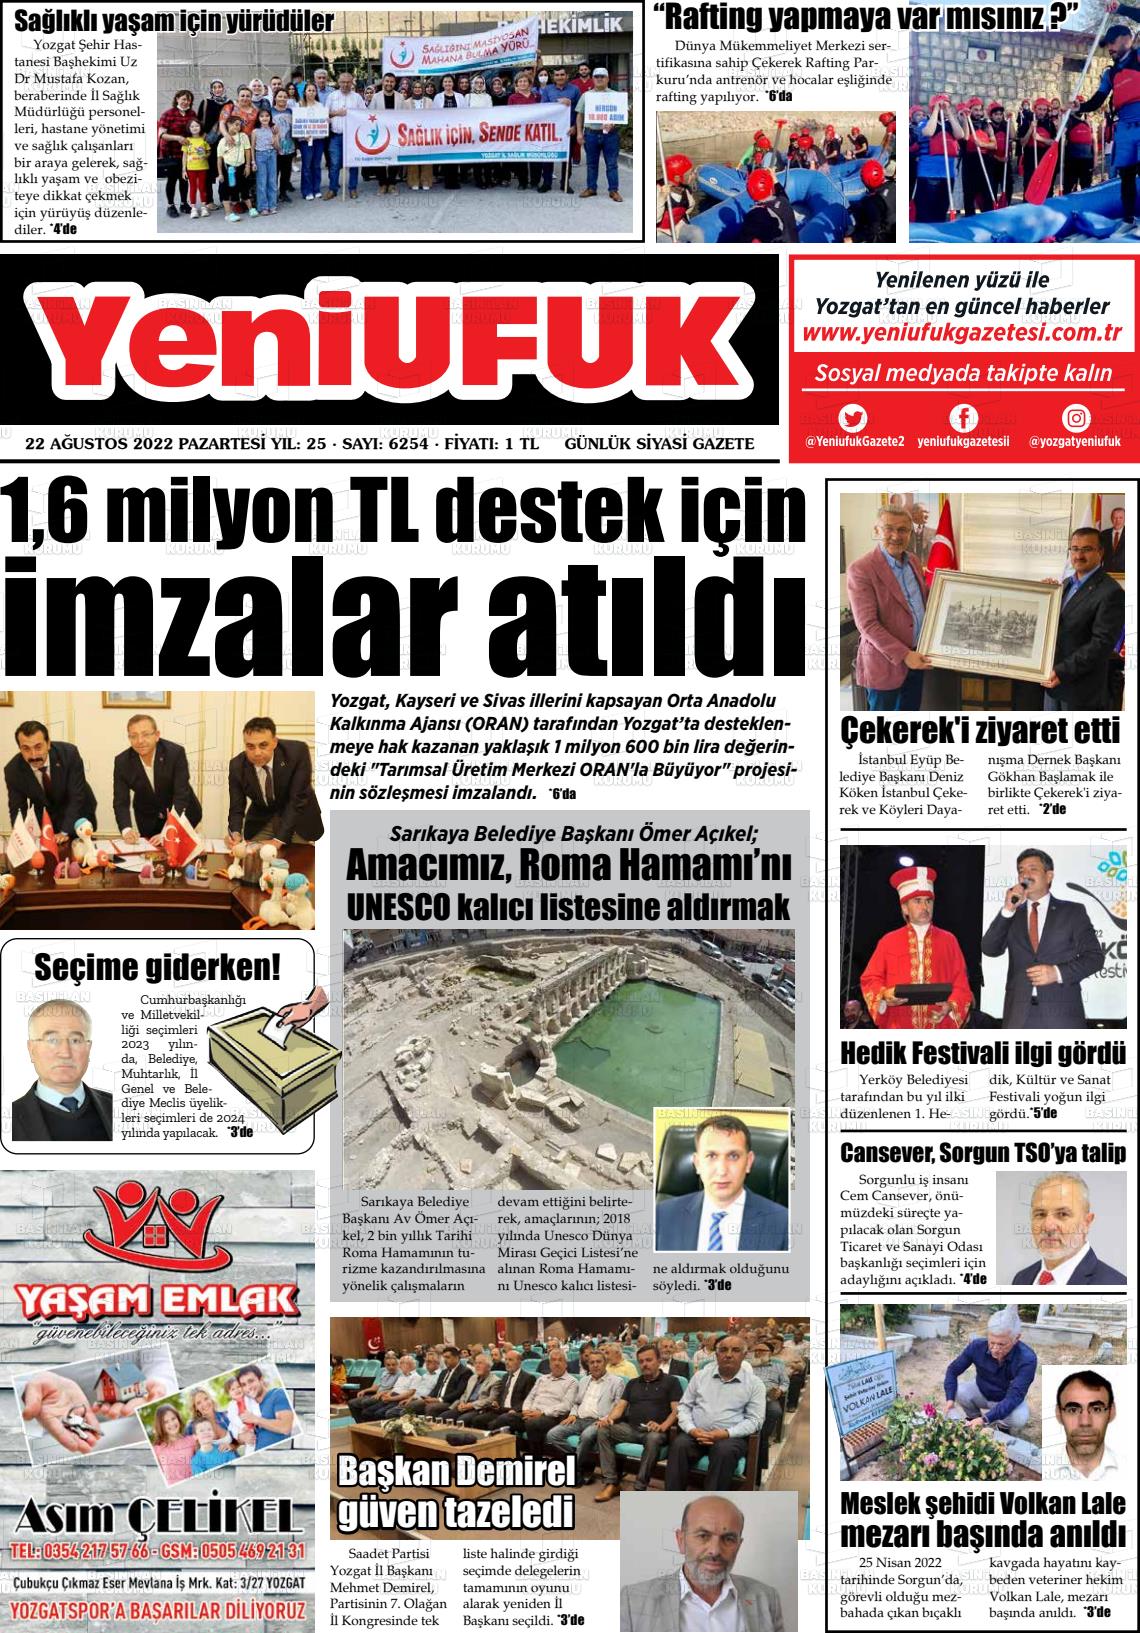 23 Ağustos 2022 Yozgat Yeni Ufuk Gazete Manşeti